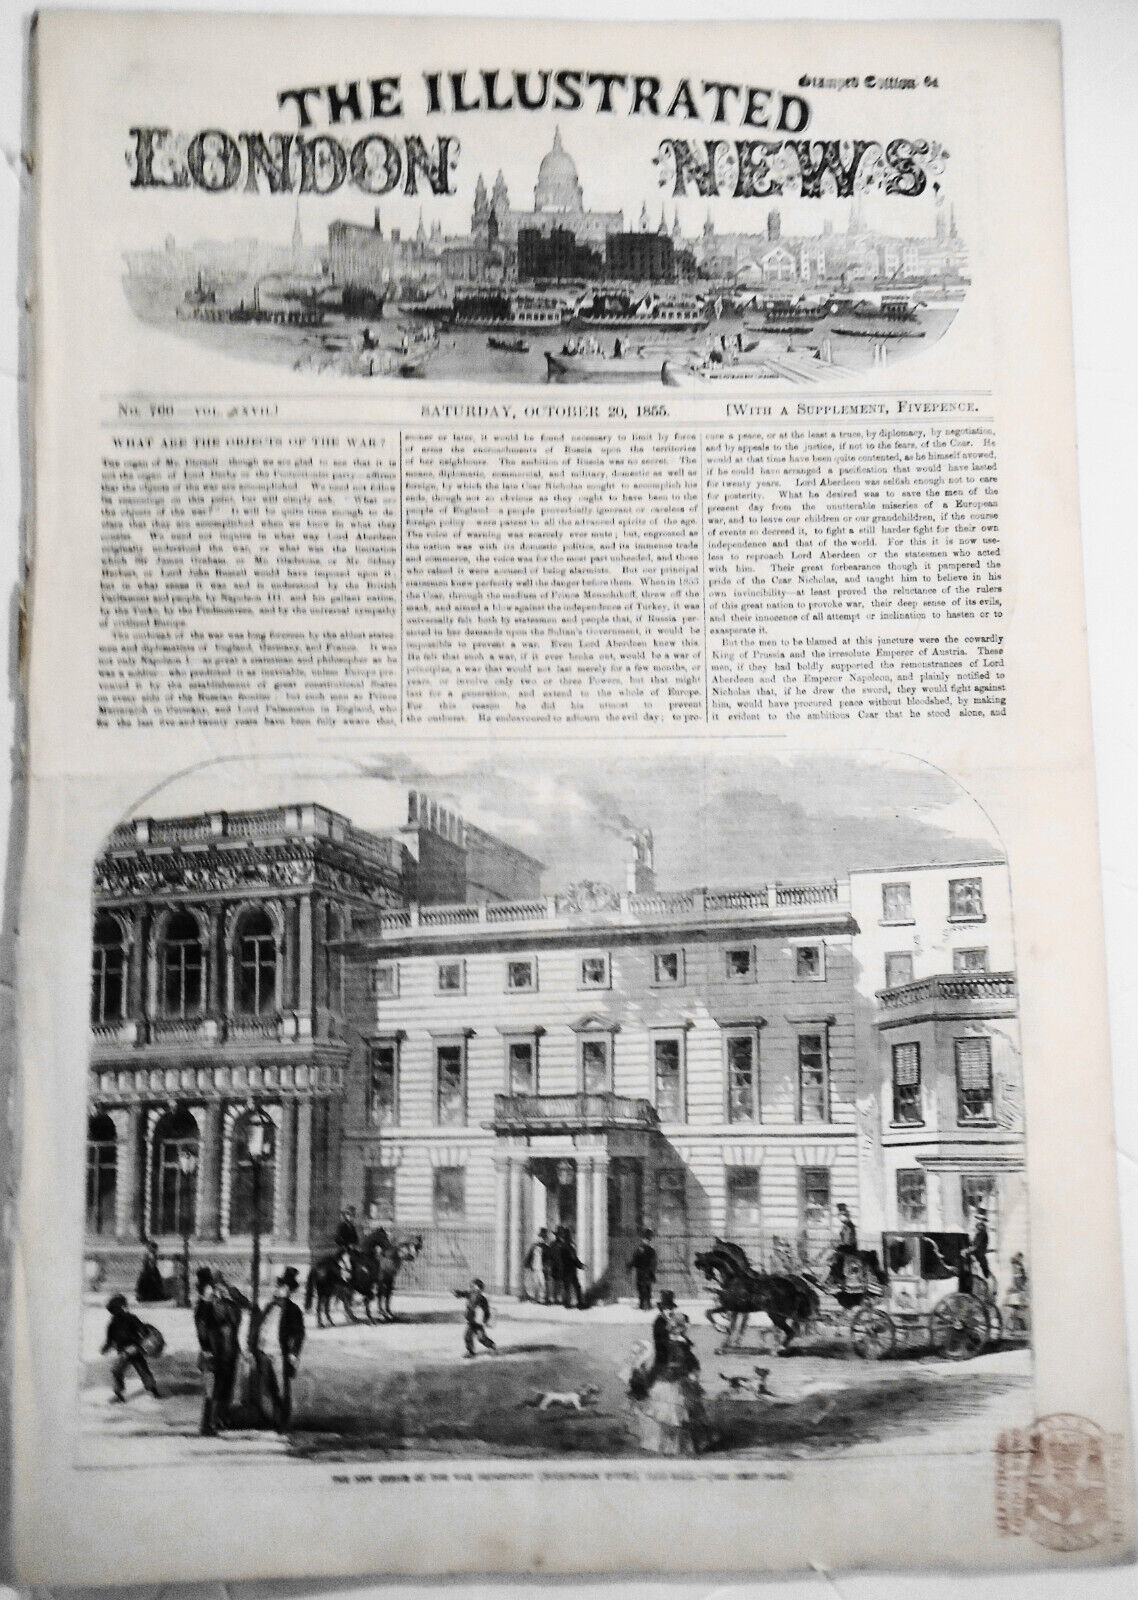 War in Sebastopol, etc - Illustrated London News October 20, 1855 original issue